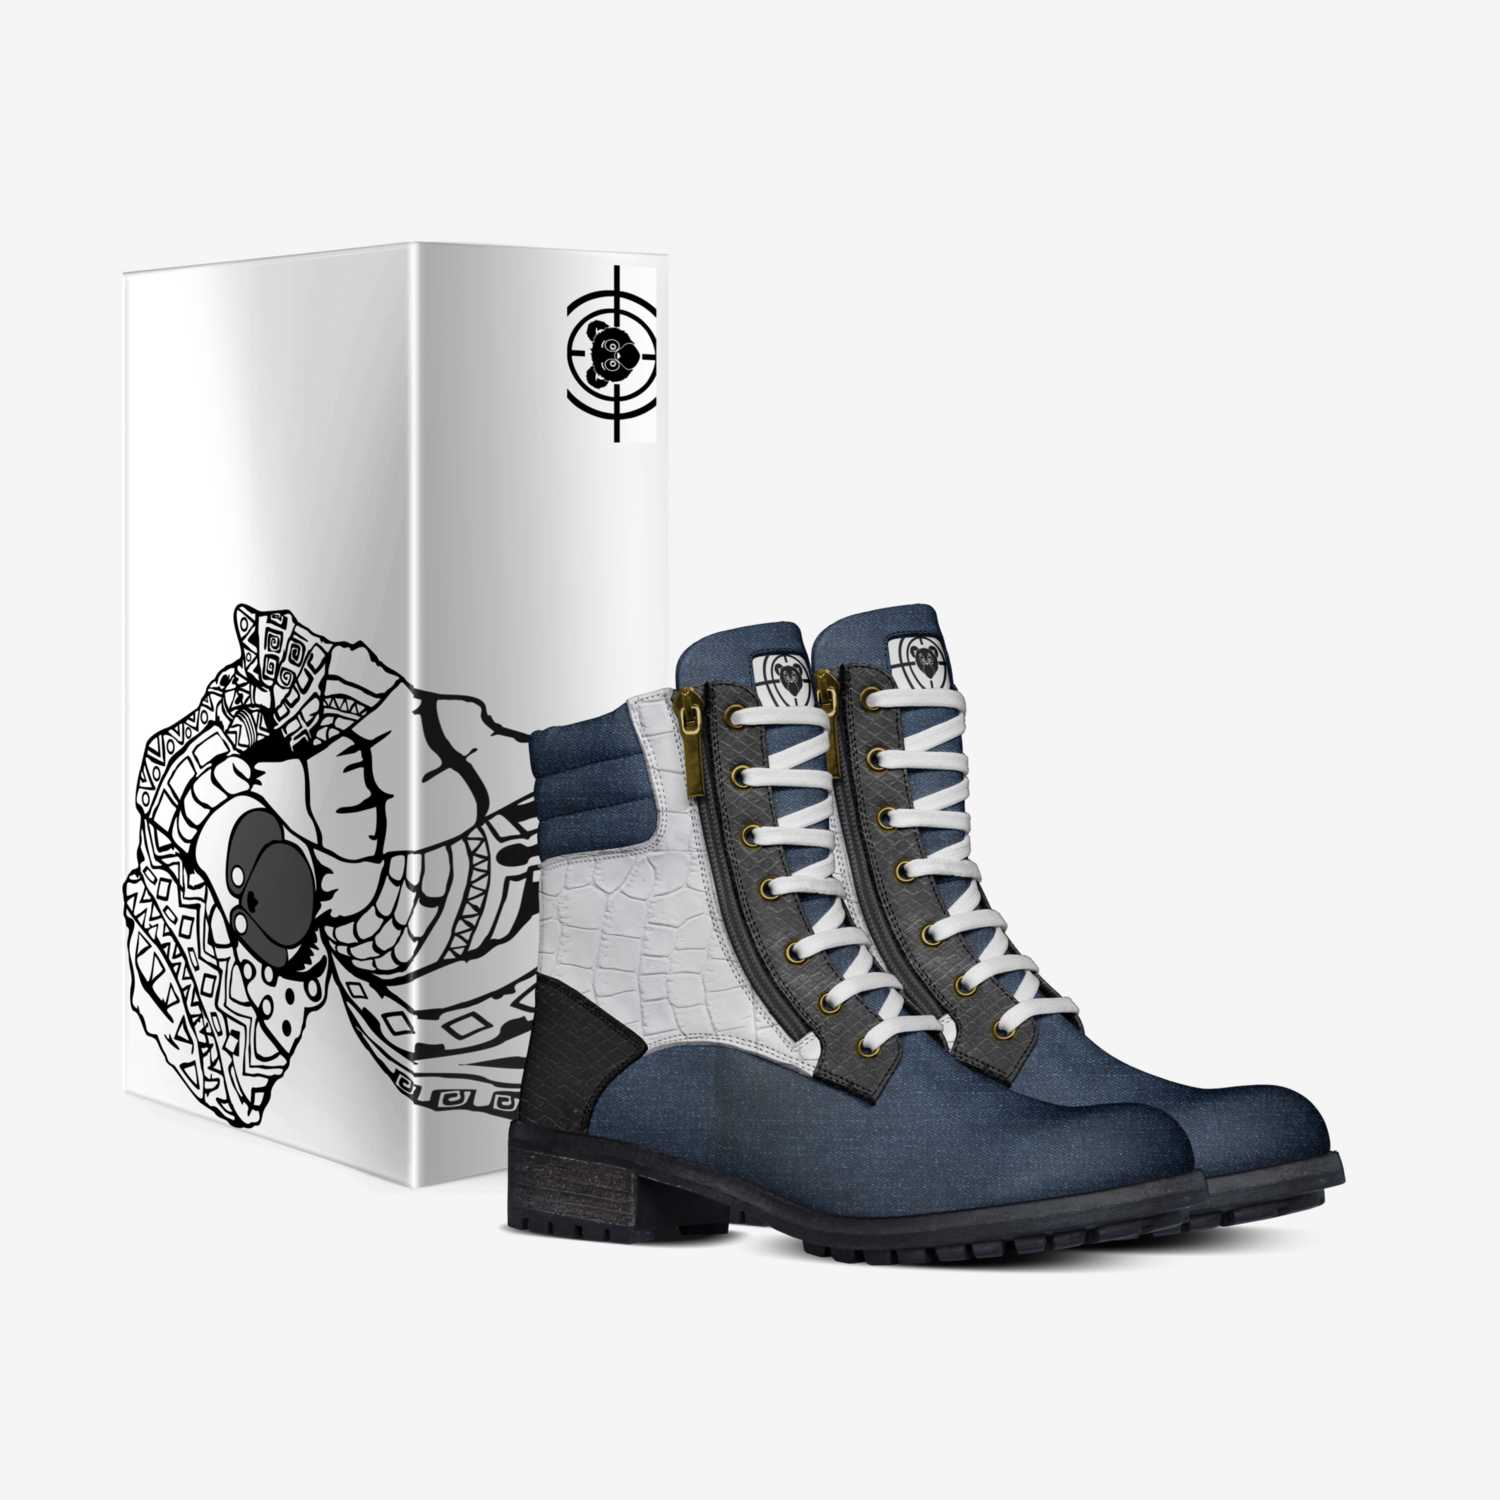 yoshi custom made in Italy shoes by Andikan Ekong | Box view